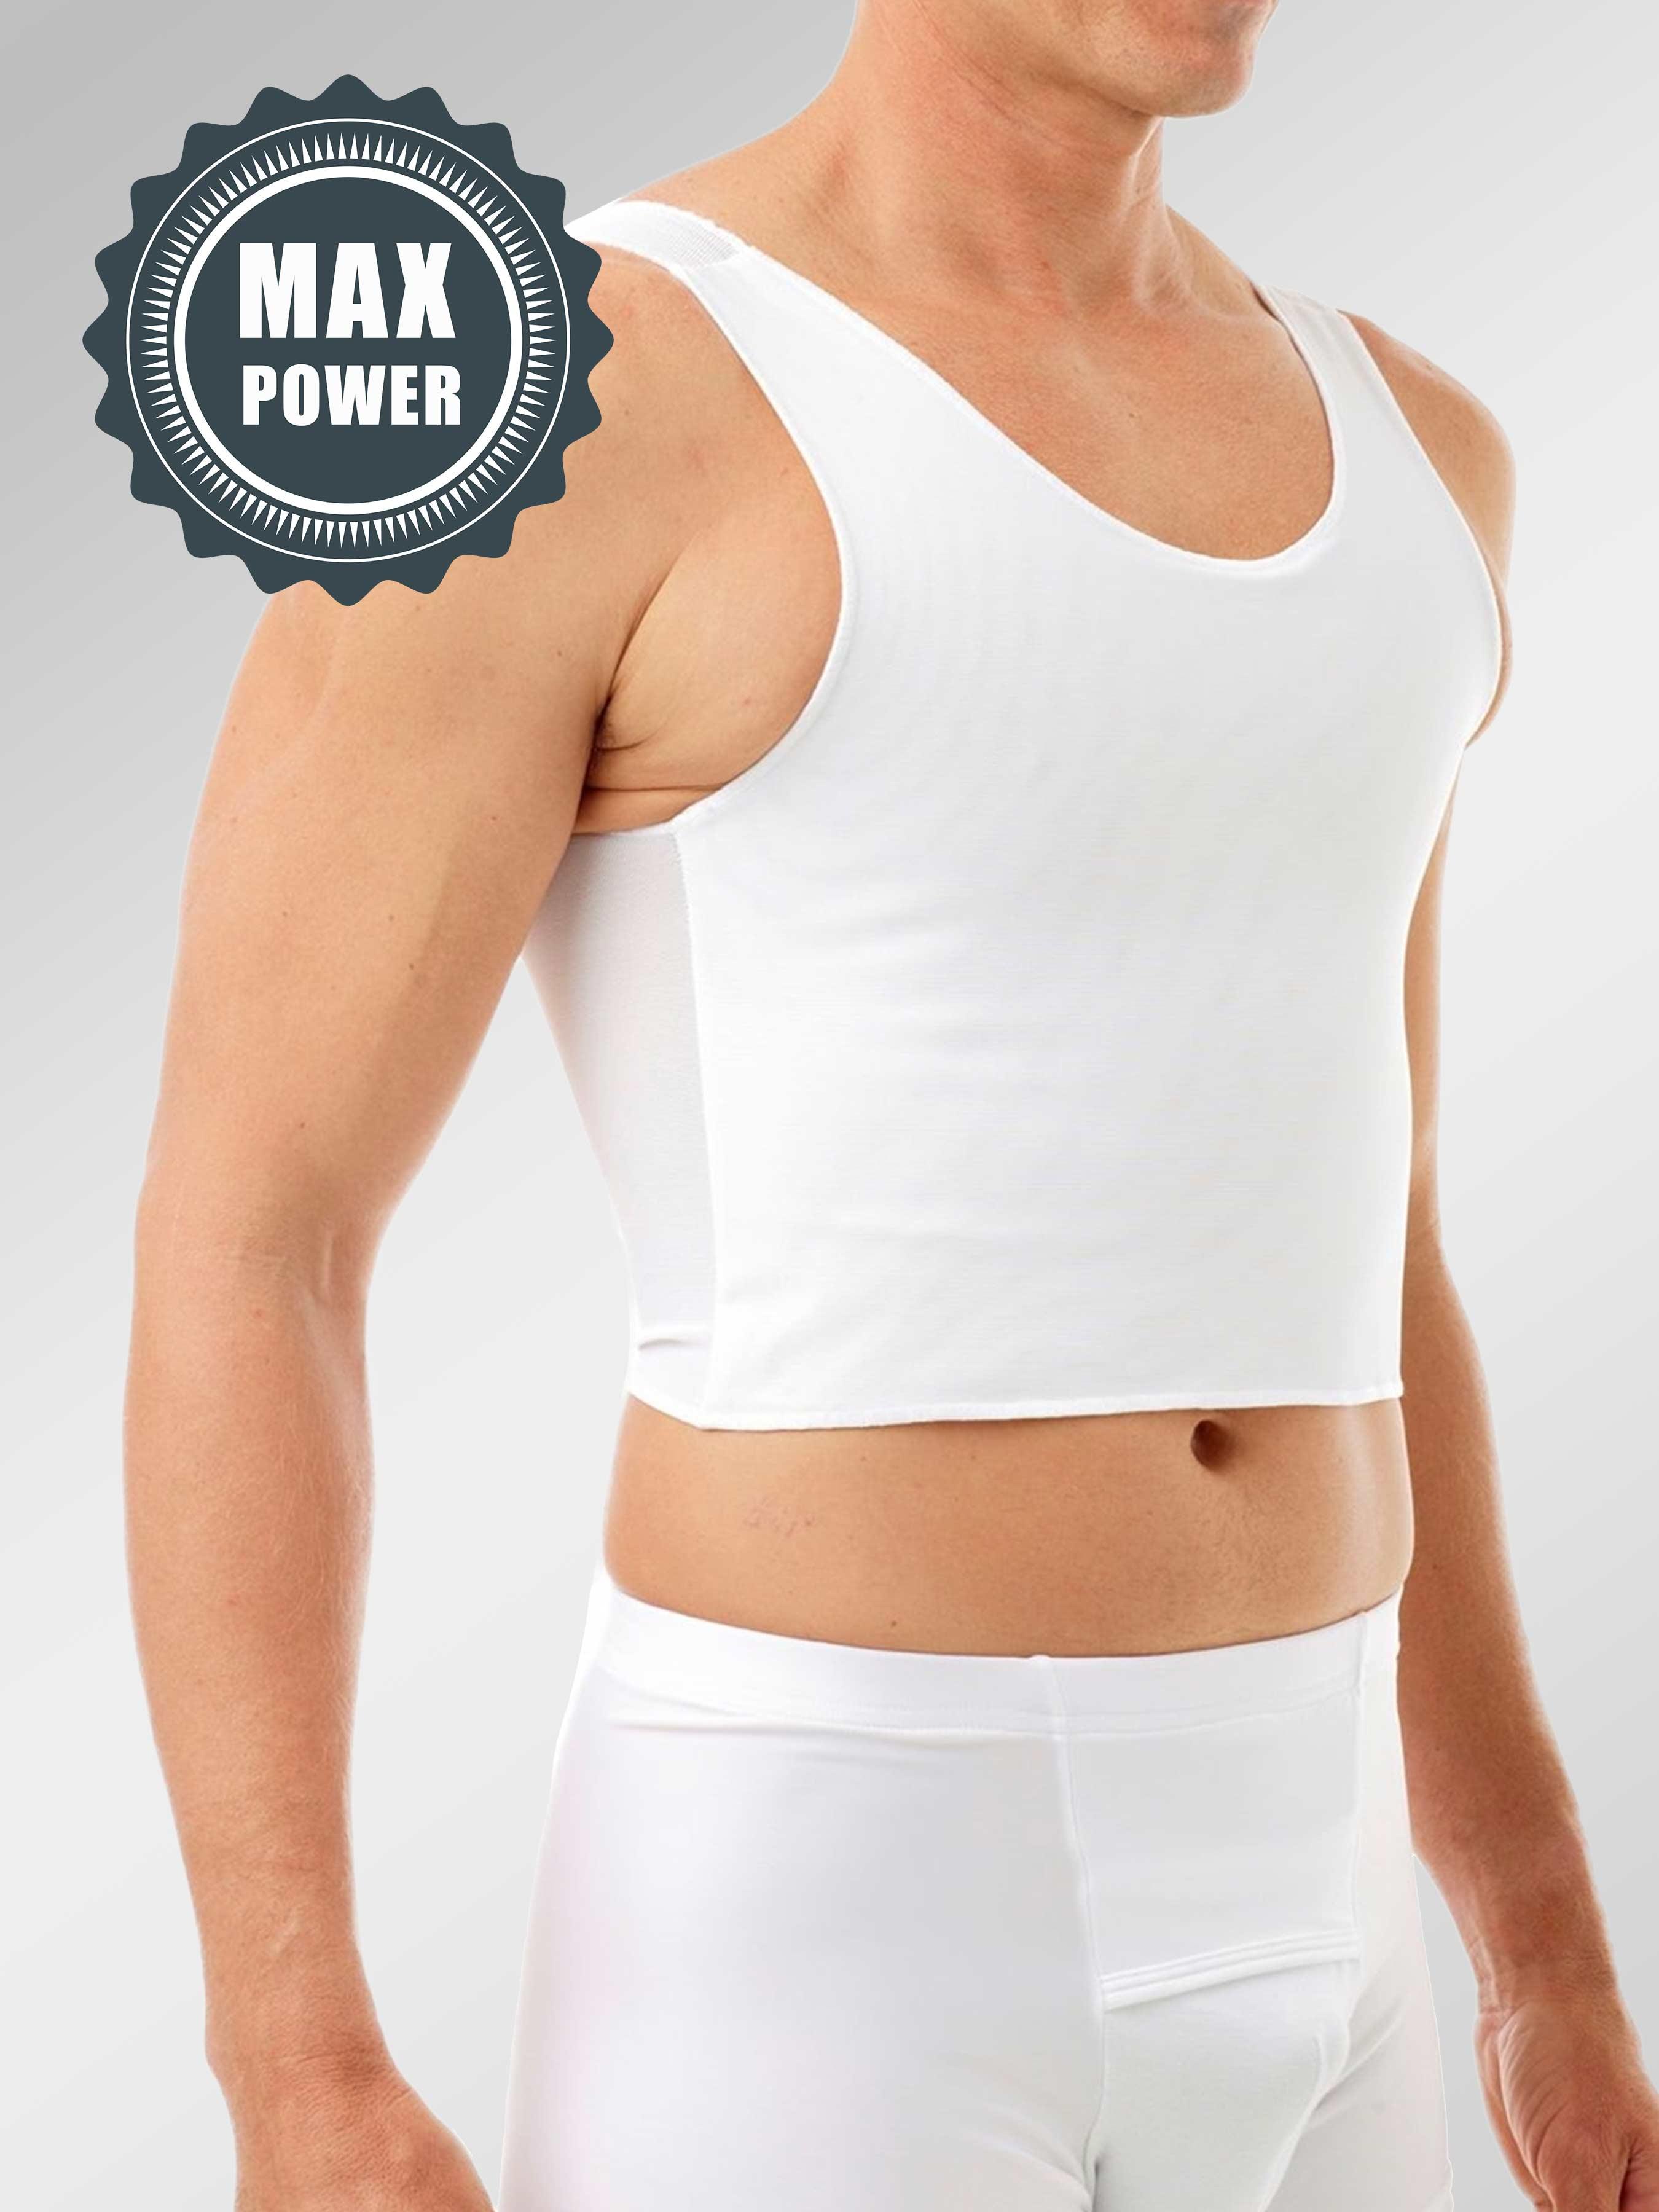 Underworks MagiCotton V-Neck Compression Shirt for Men - White - XS